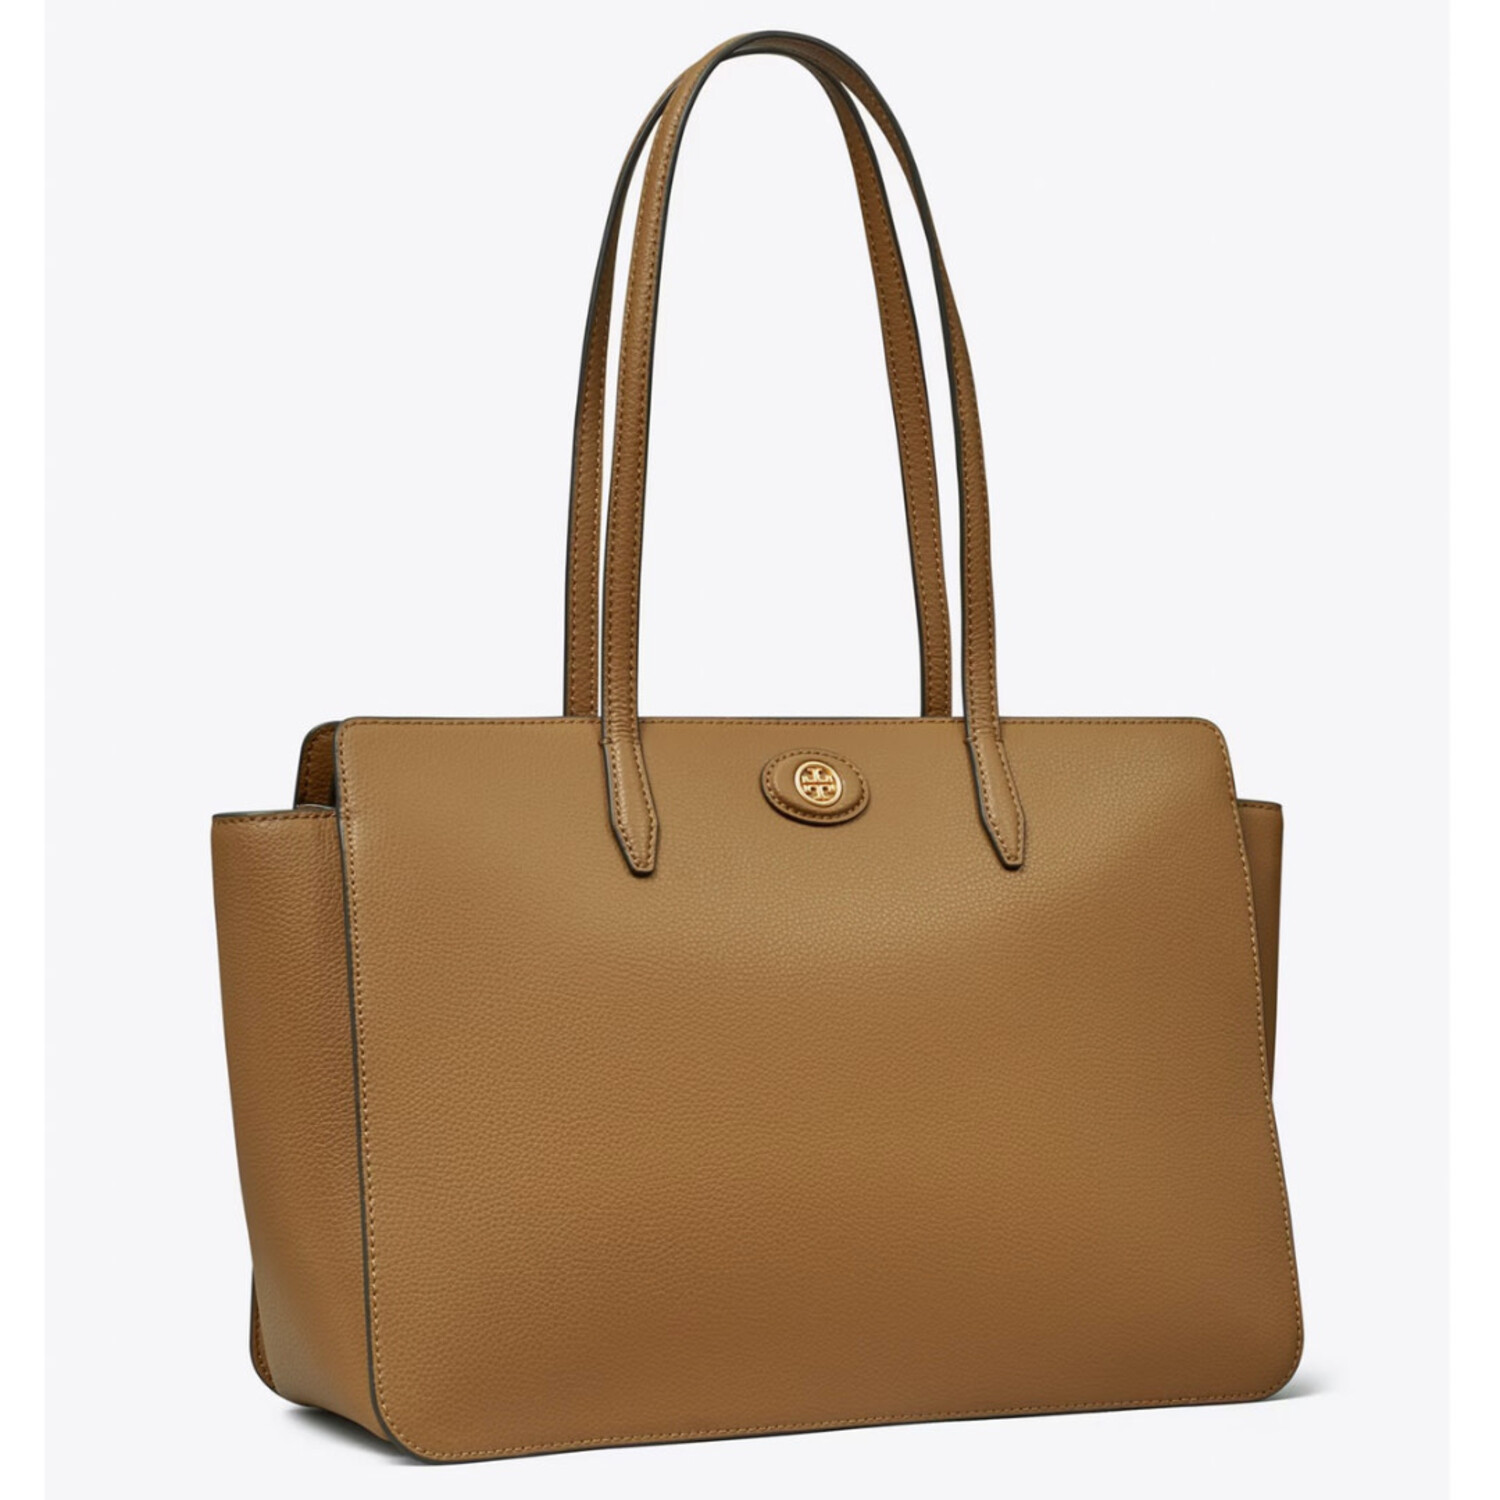 Tory Burch Handbags for sale in Seattle, Washington | Facebook Marketplace  | Facebook